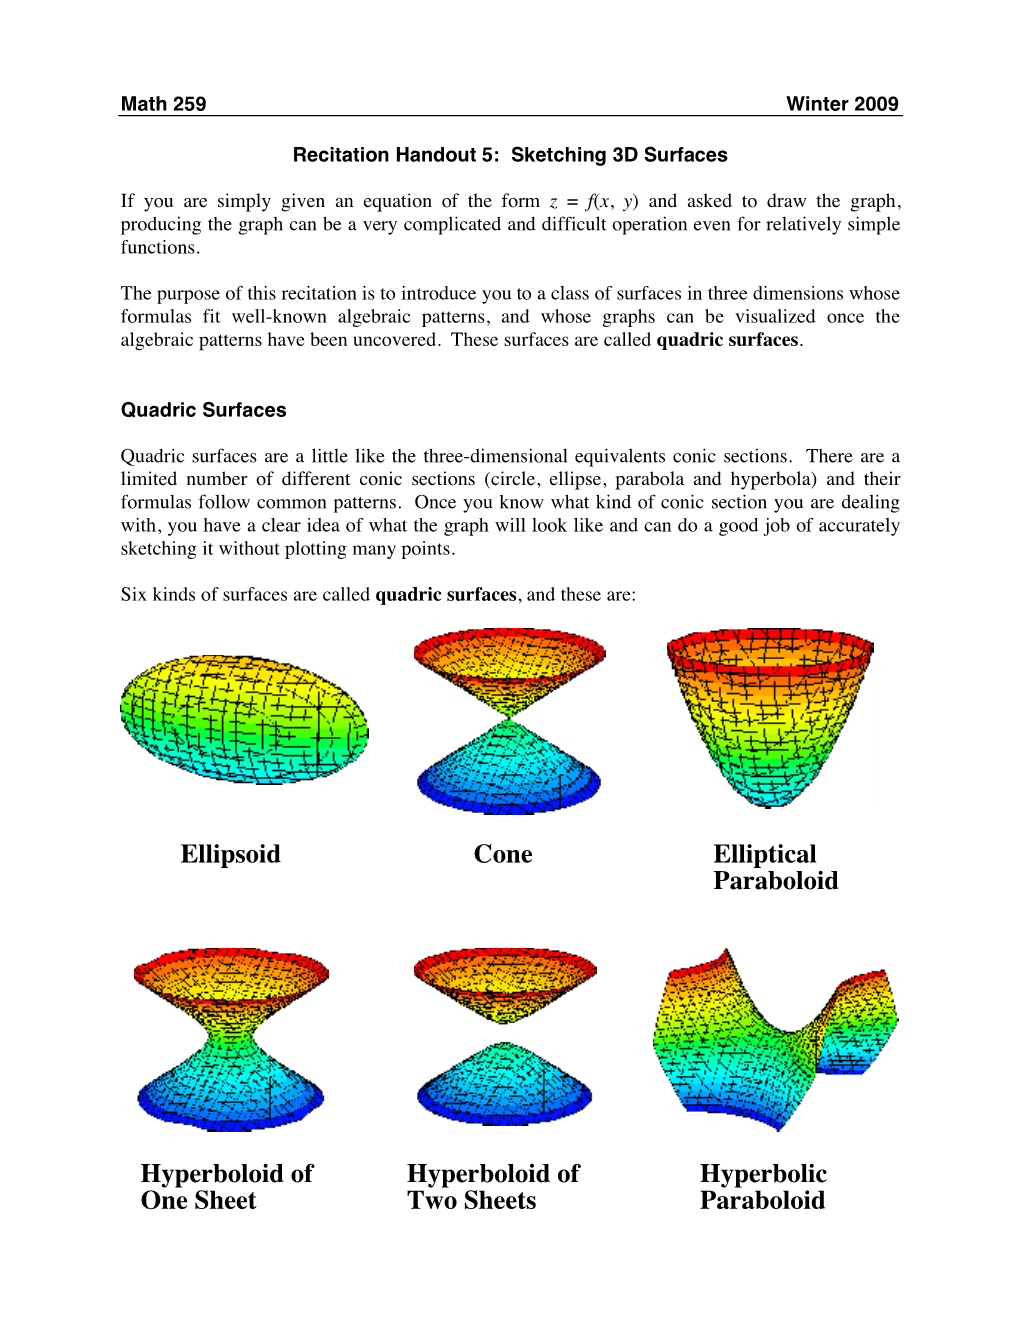 Ellipsoid Cone Elliptical Paraboloid Hyperboloid of One